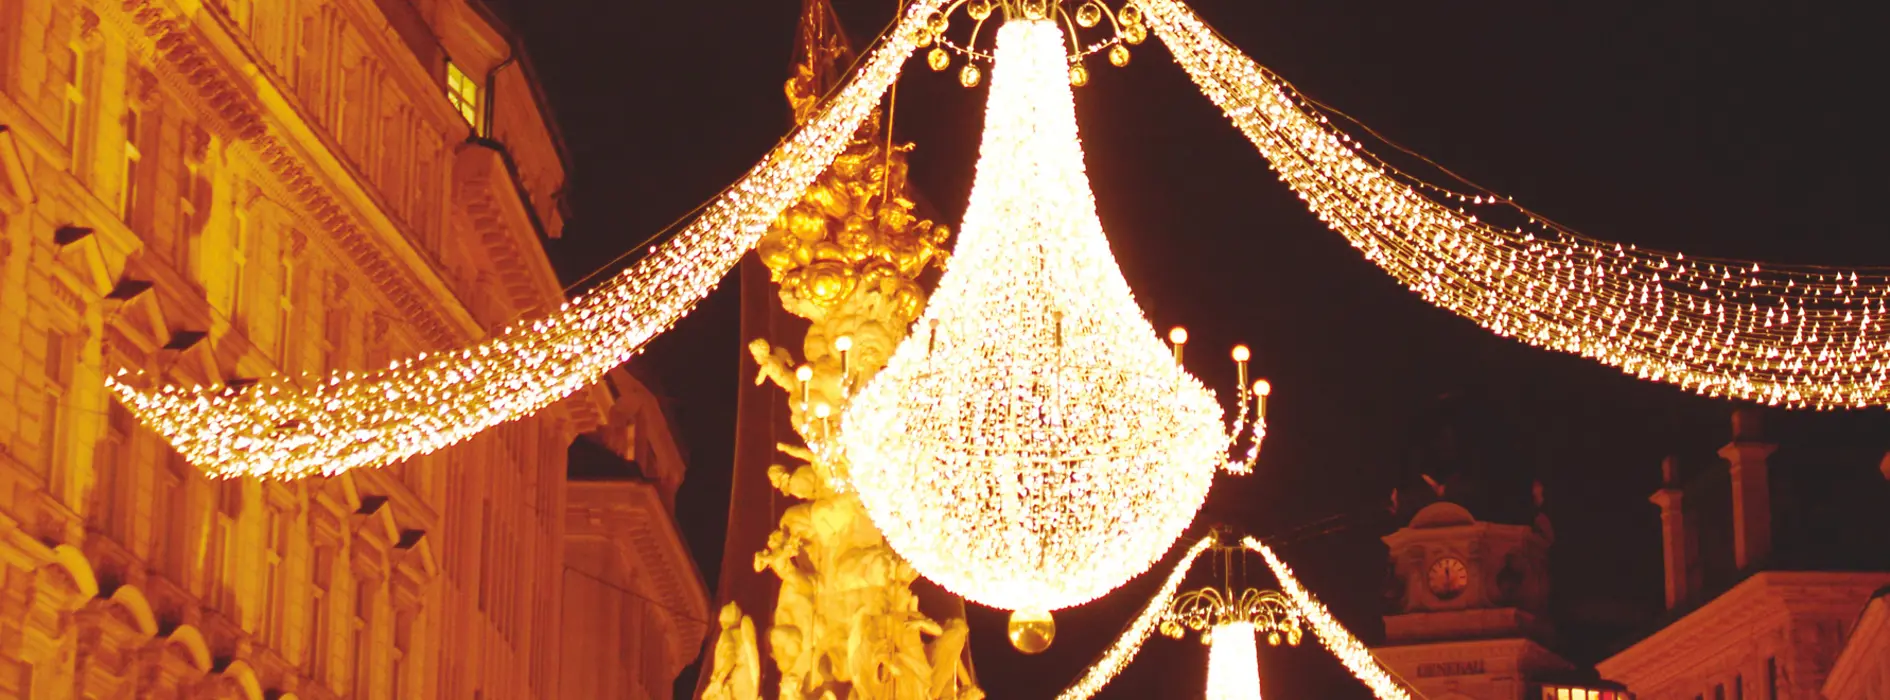 Iluminación navideña en Viena: